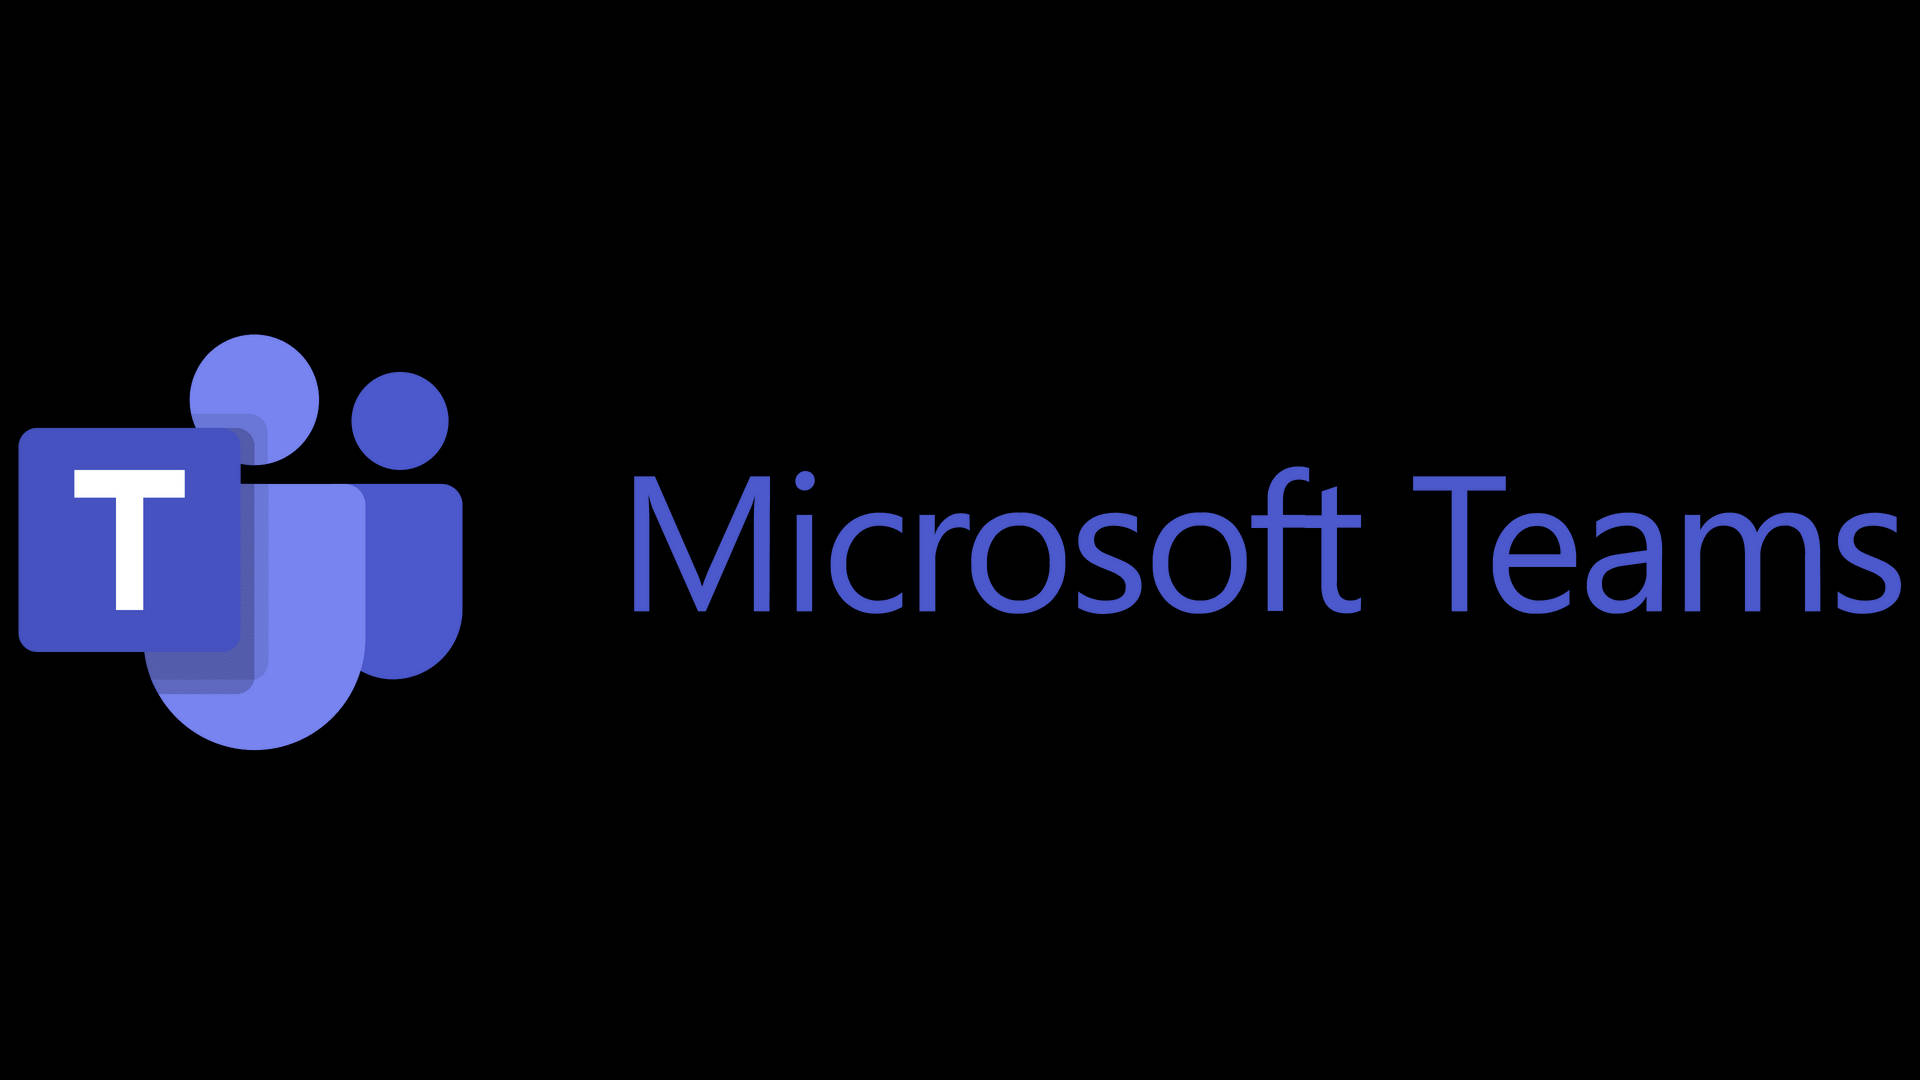 Microsoft Teams Company Logo Background